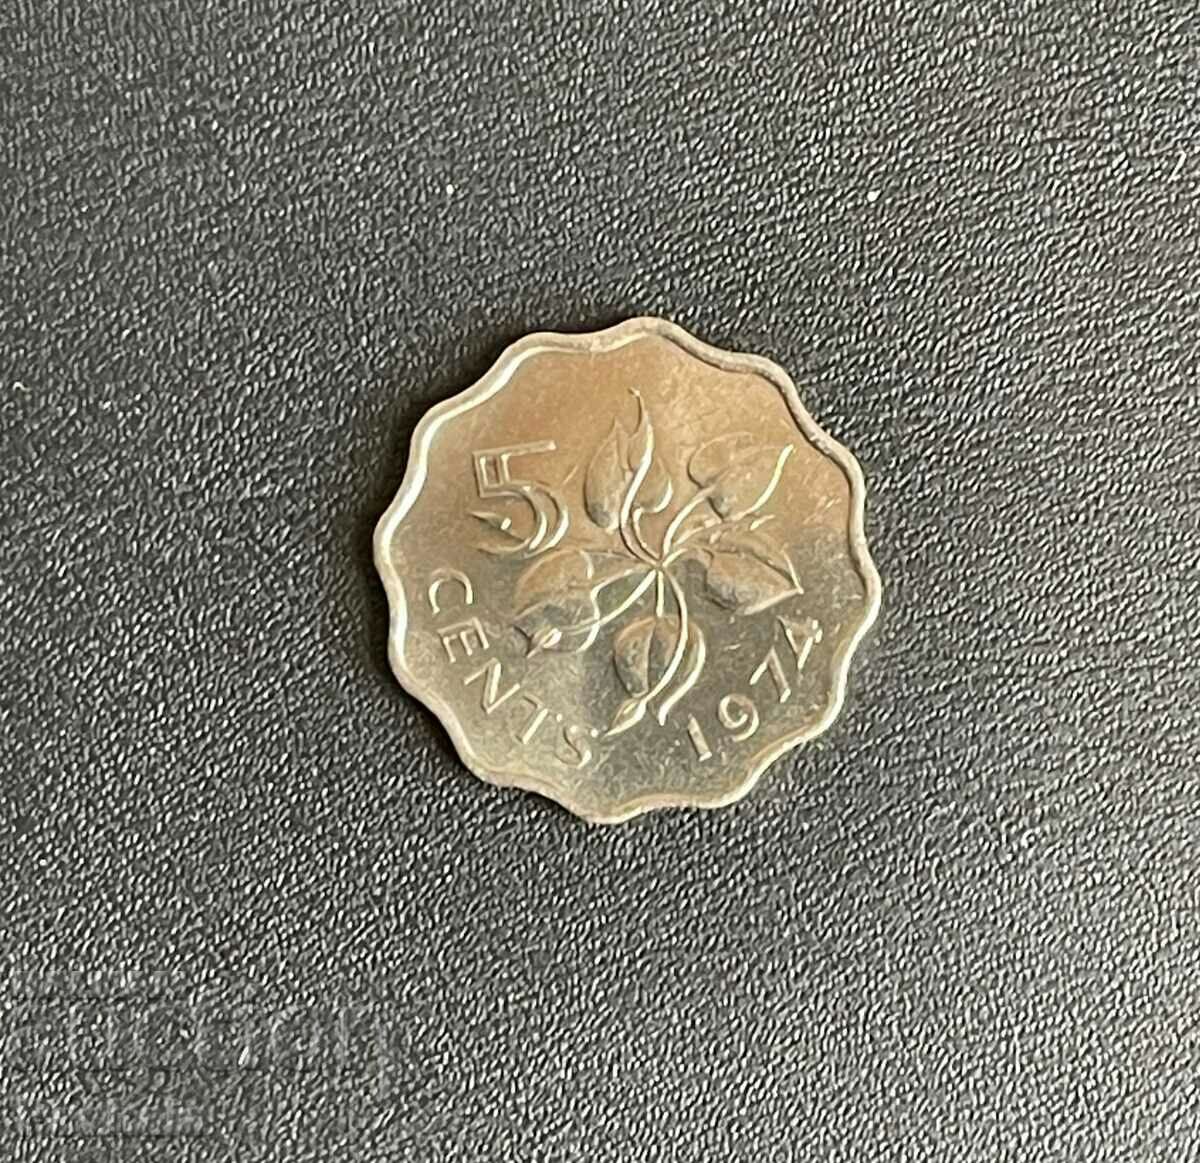 Swaziland 5 cents 1974